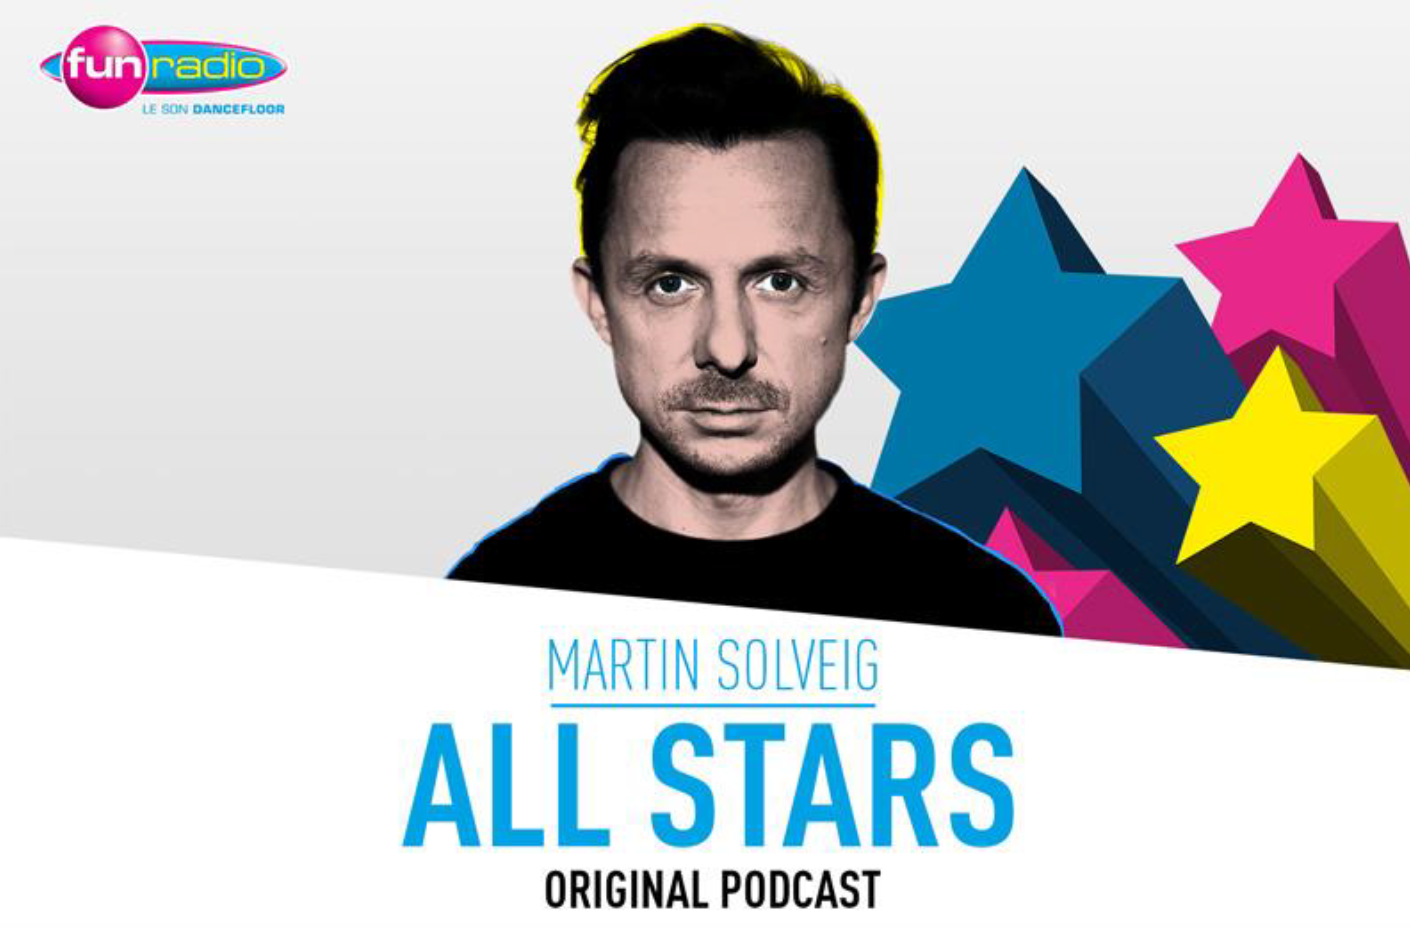 Fun Radio lance son podcast "All Stars" avec Martin Solveig